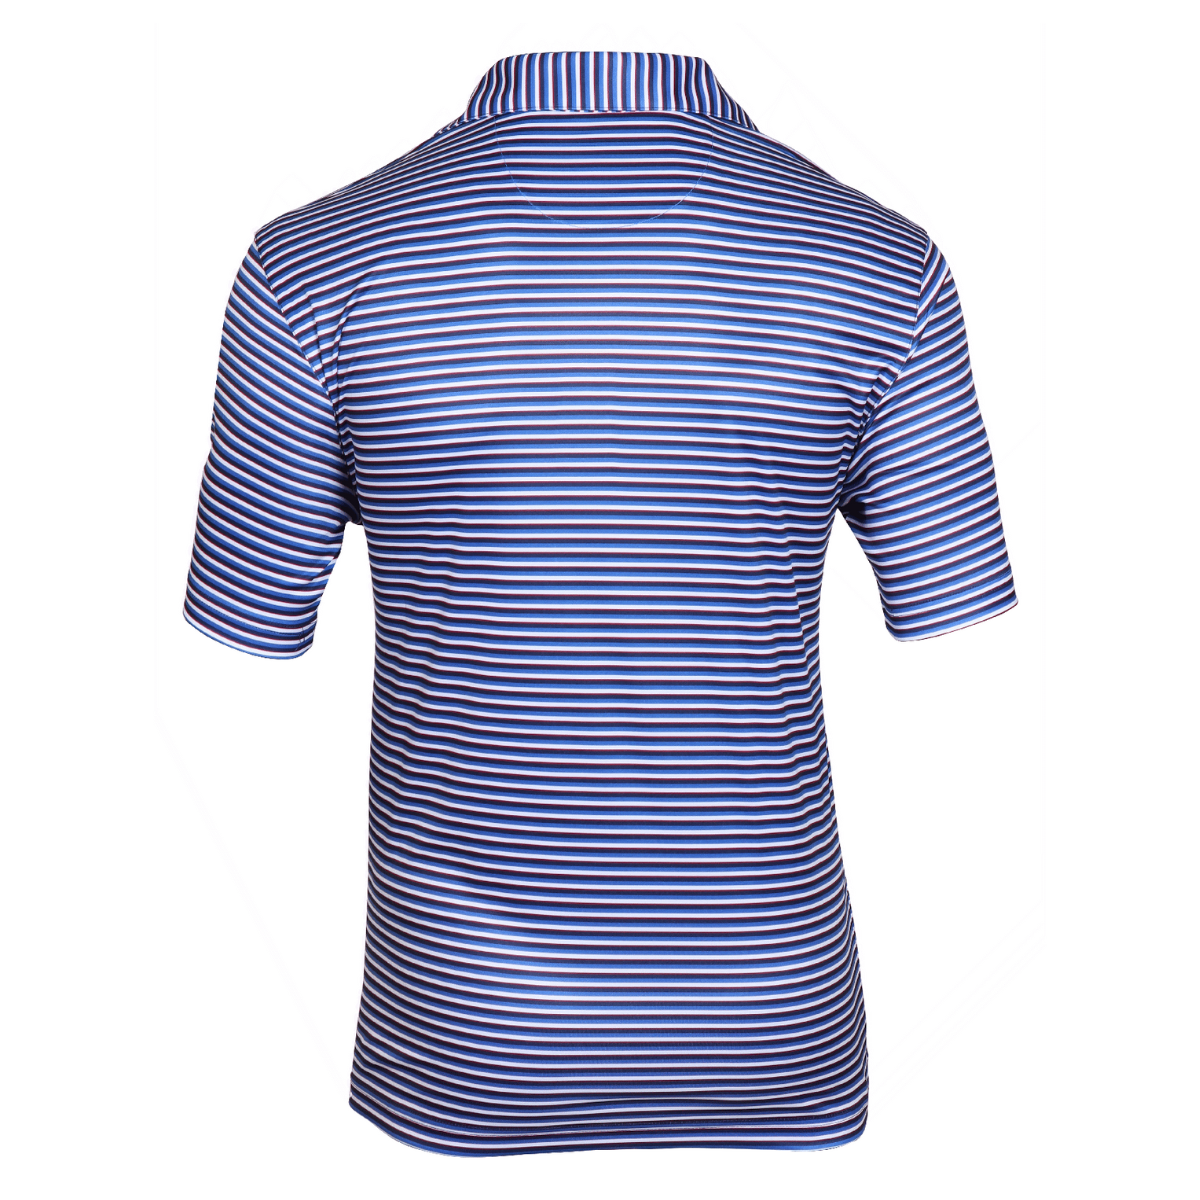 Greg Norman Men's Multi Stripes Polo T-Shirt (US Size)